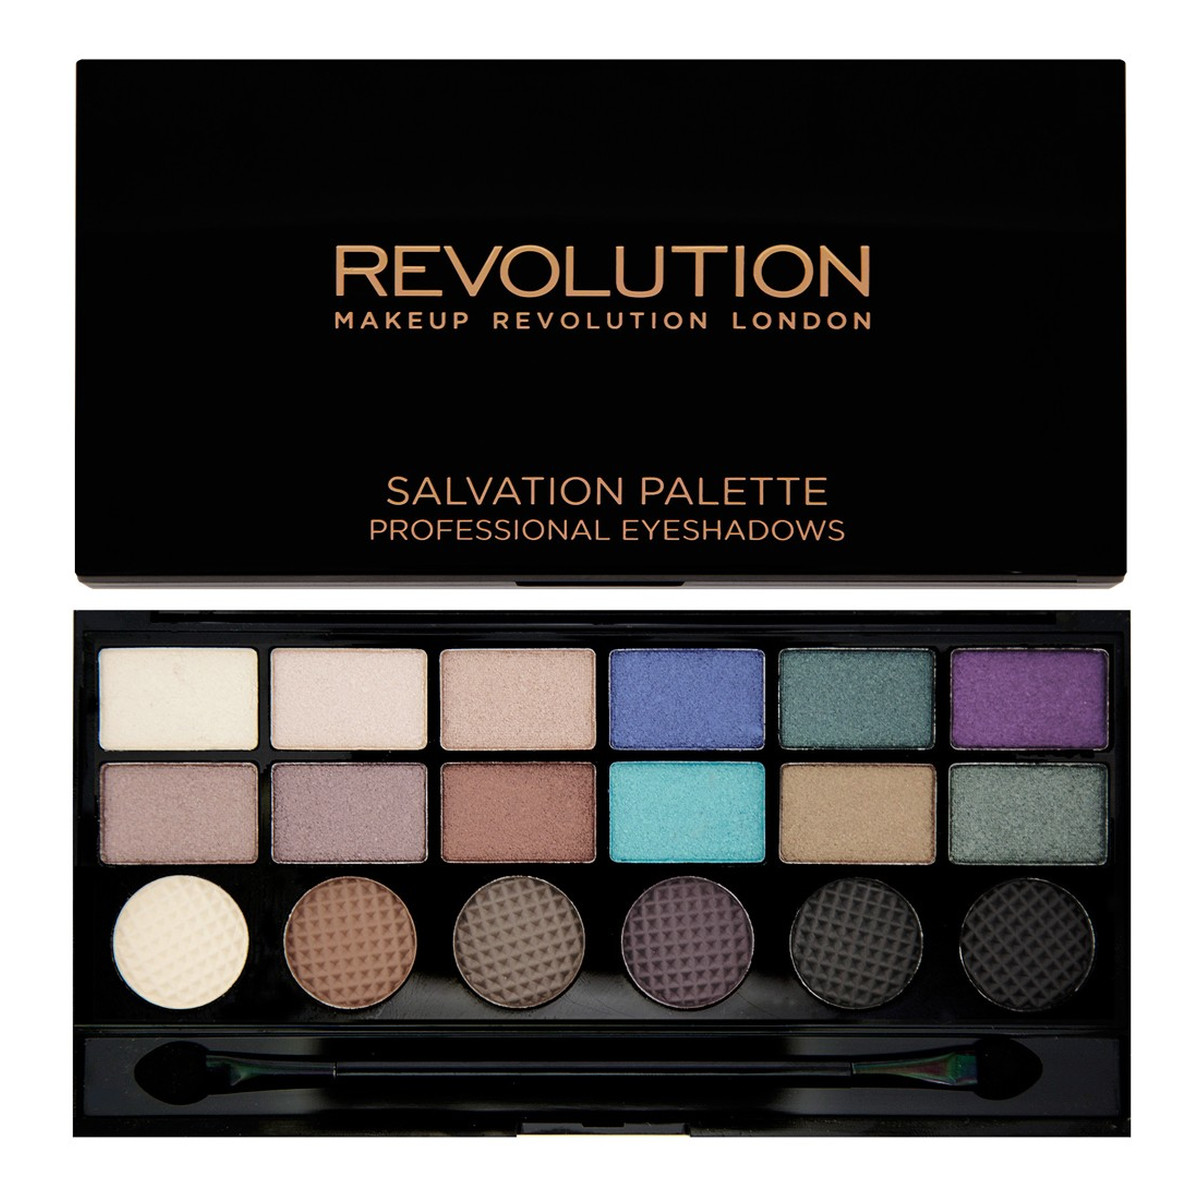 Makeup Revolution Salvation Palette Welcome To The Pleasuredome Paleta 18 Cieni Do Powiek 13g